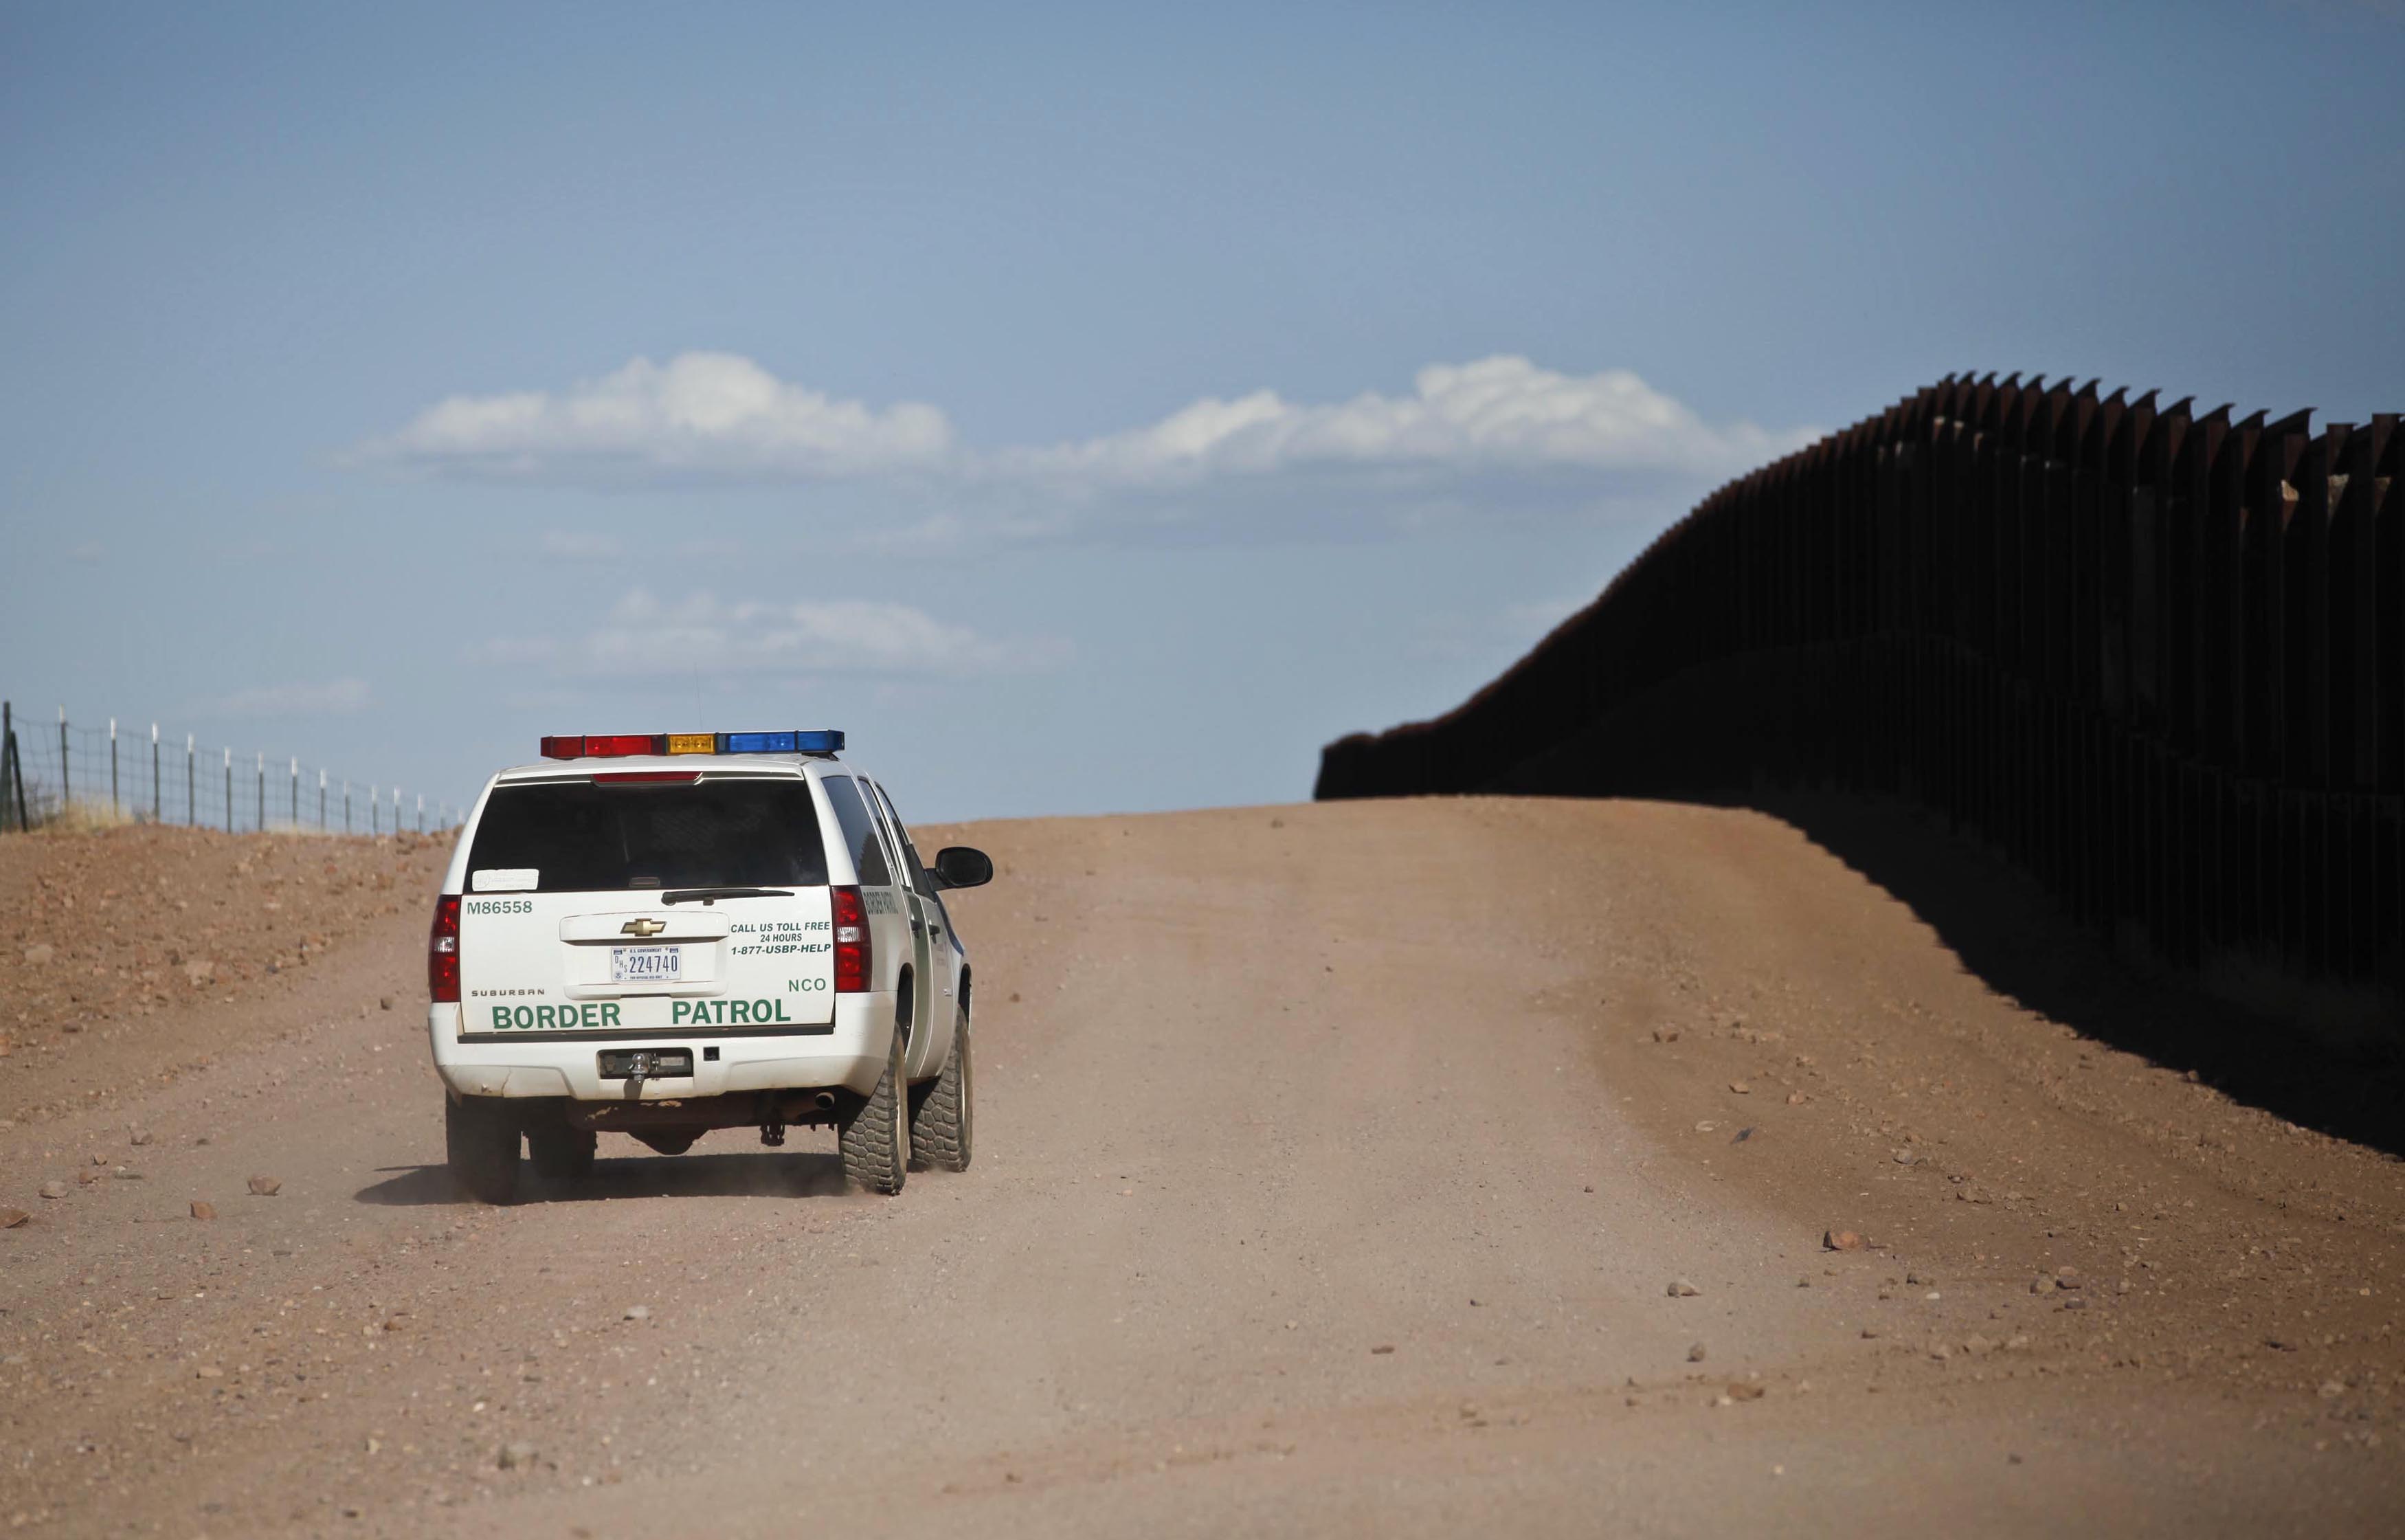 U.S. border patrol